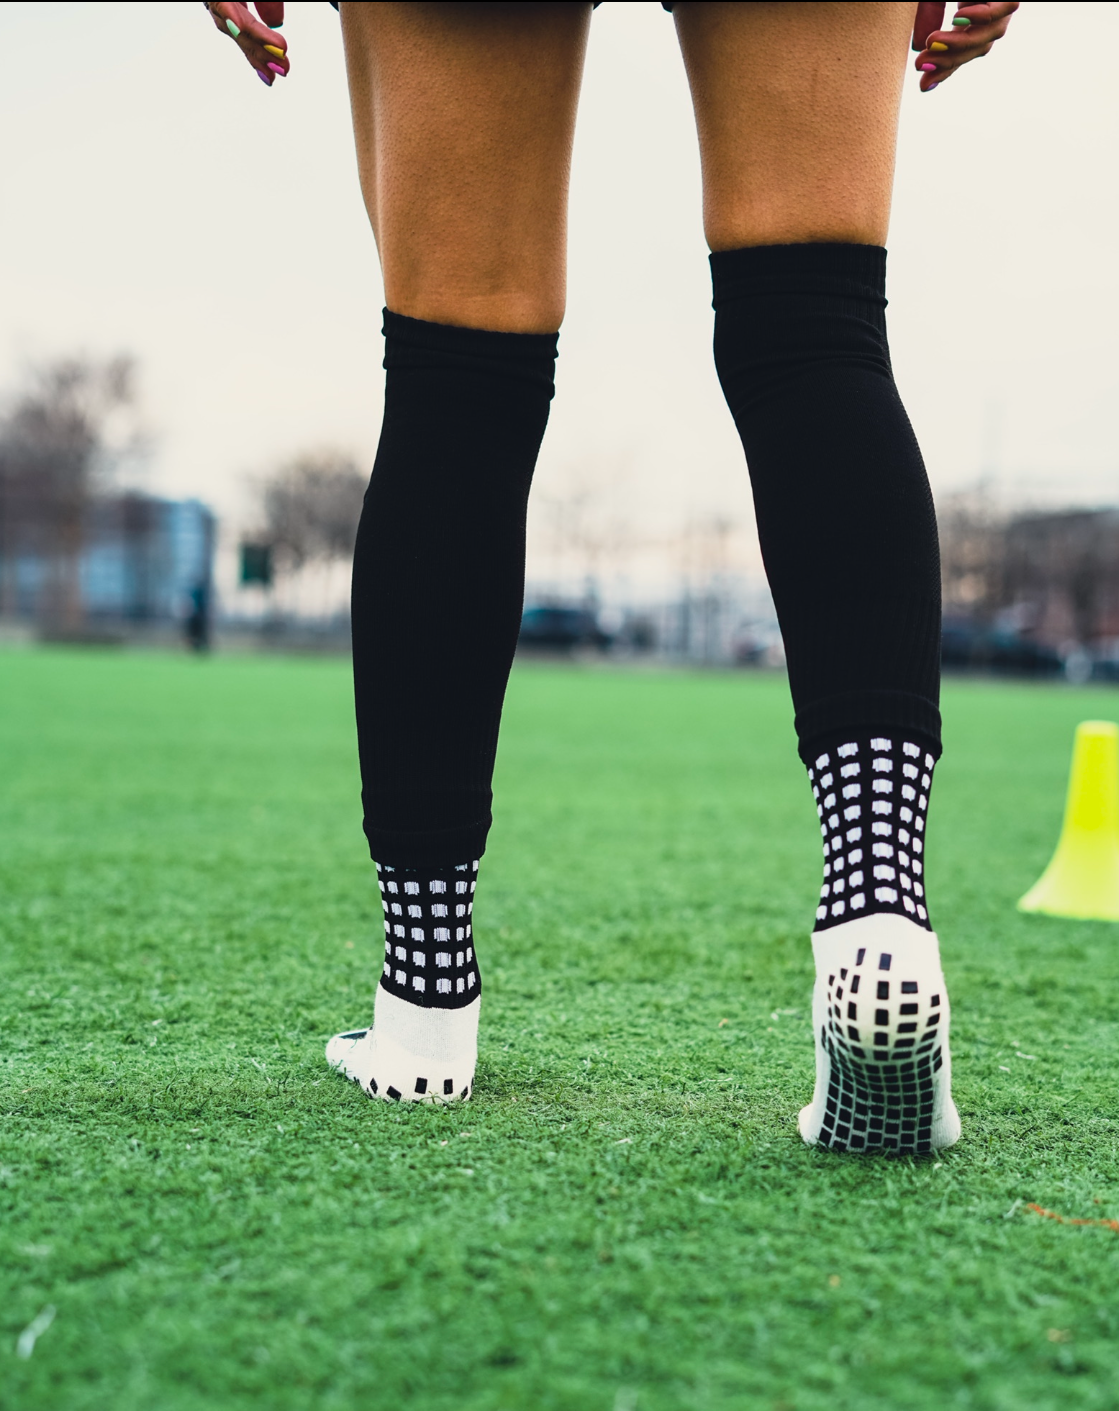 Soccer Grip Socks – Advantage Goalkeeping